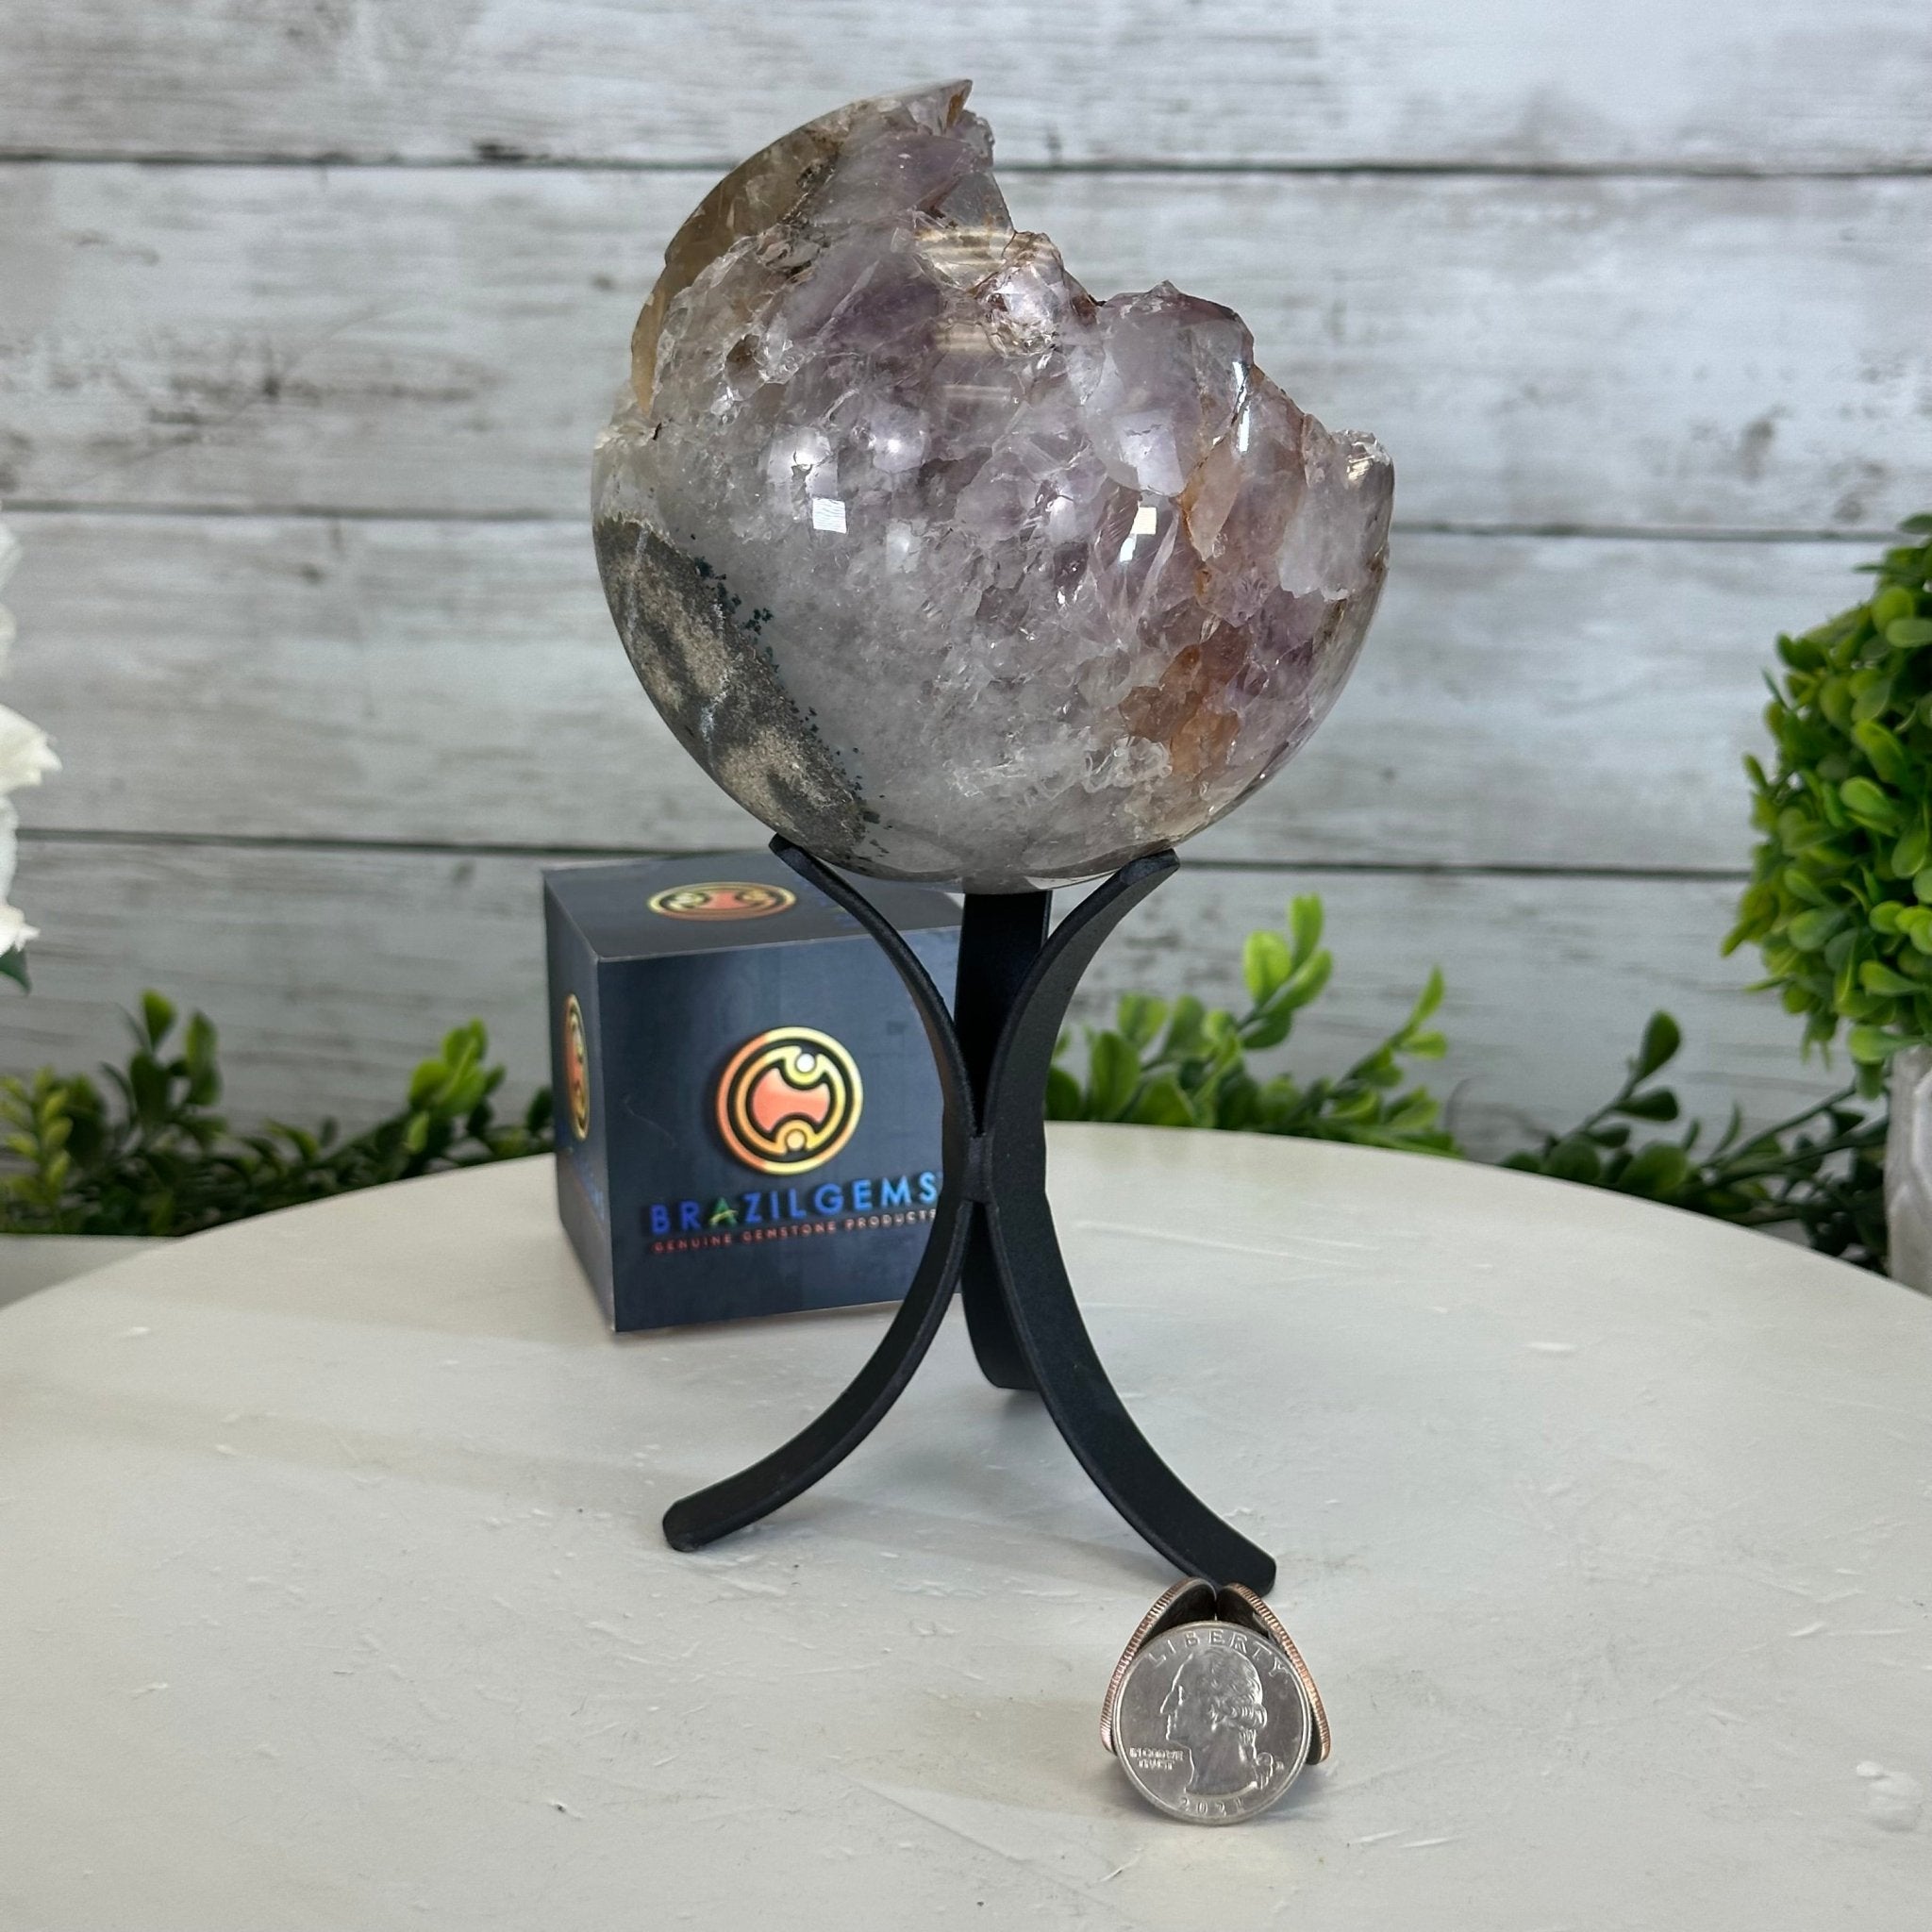 Druzy Amethyst Sphere on a Metal Stand, 2.6 lbs & 8" Tall #5630-0048 - Brazil GemsBrazil GemsDruzy Amethyst Sphere on a Metal Stand, 2.6 lbs & 8" Tall #5630-0048Spheres5630-0048